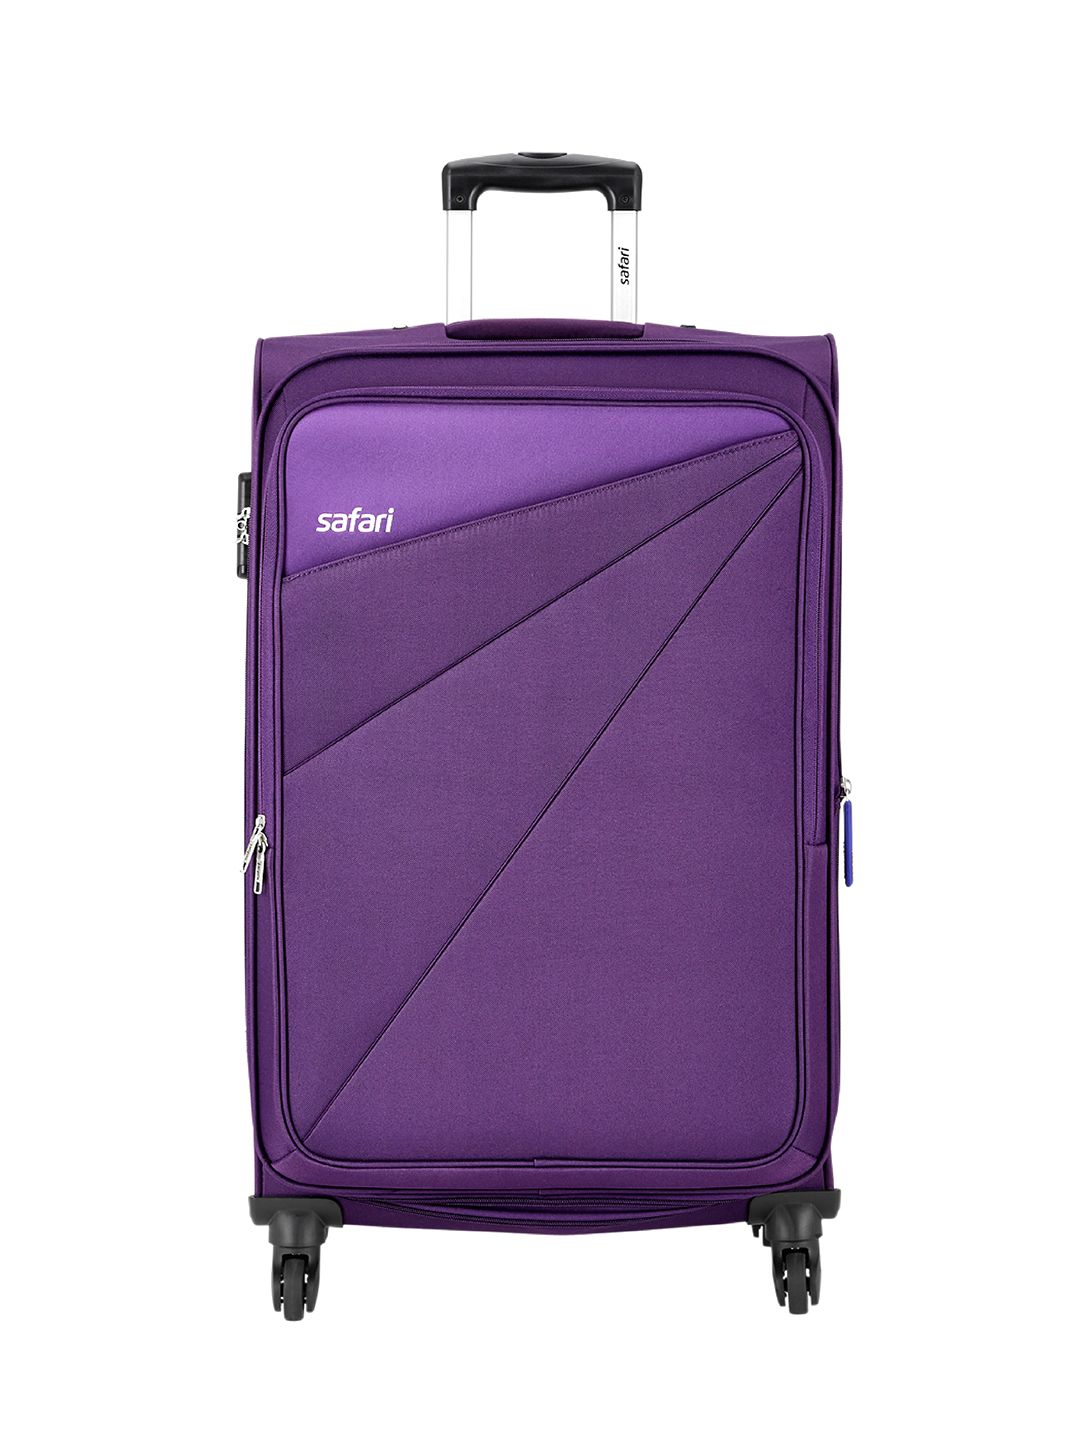 Safari Purple Mimik Large Trolley Bag Price in India